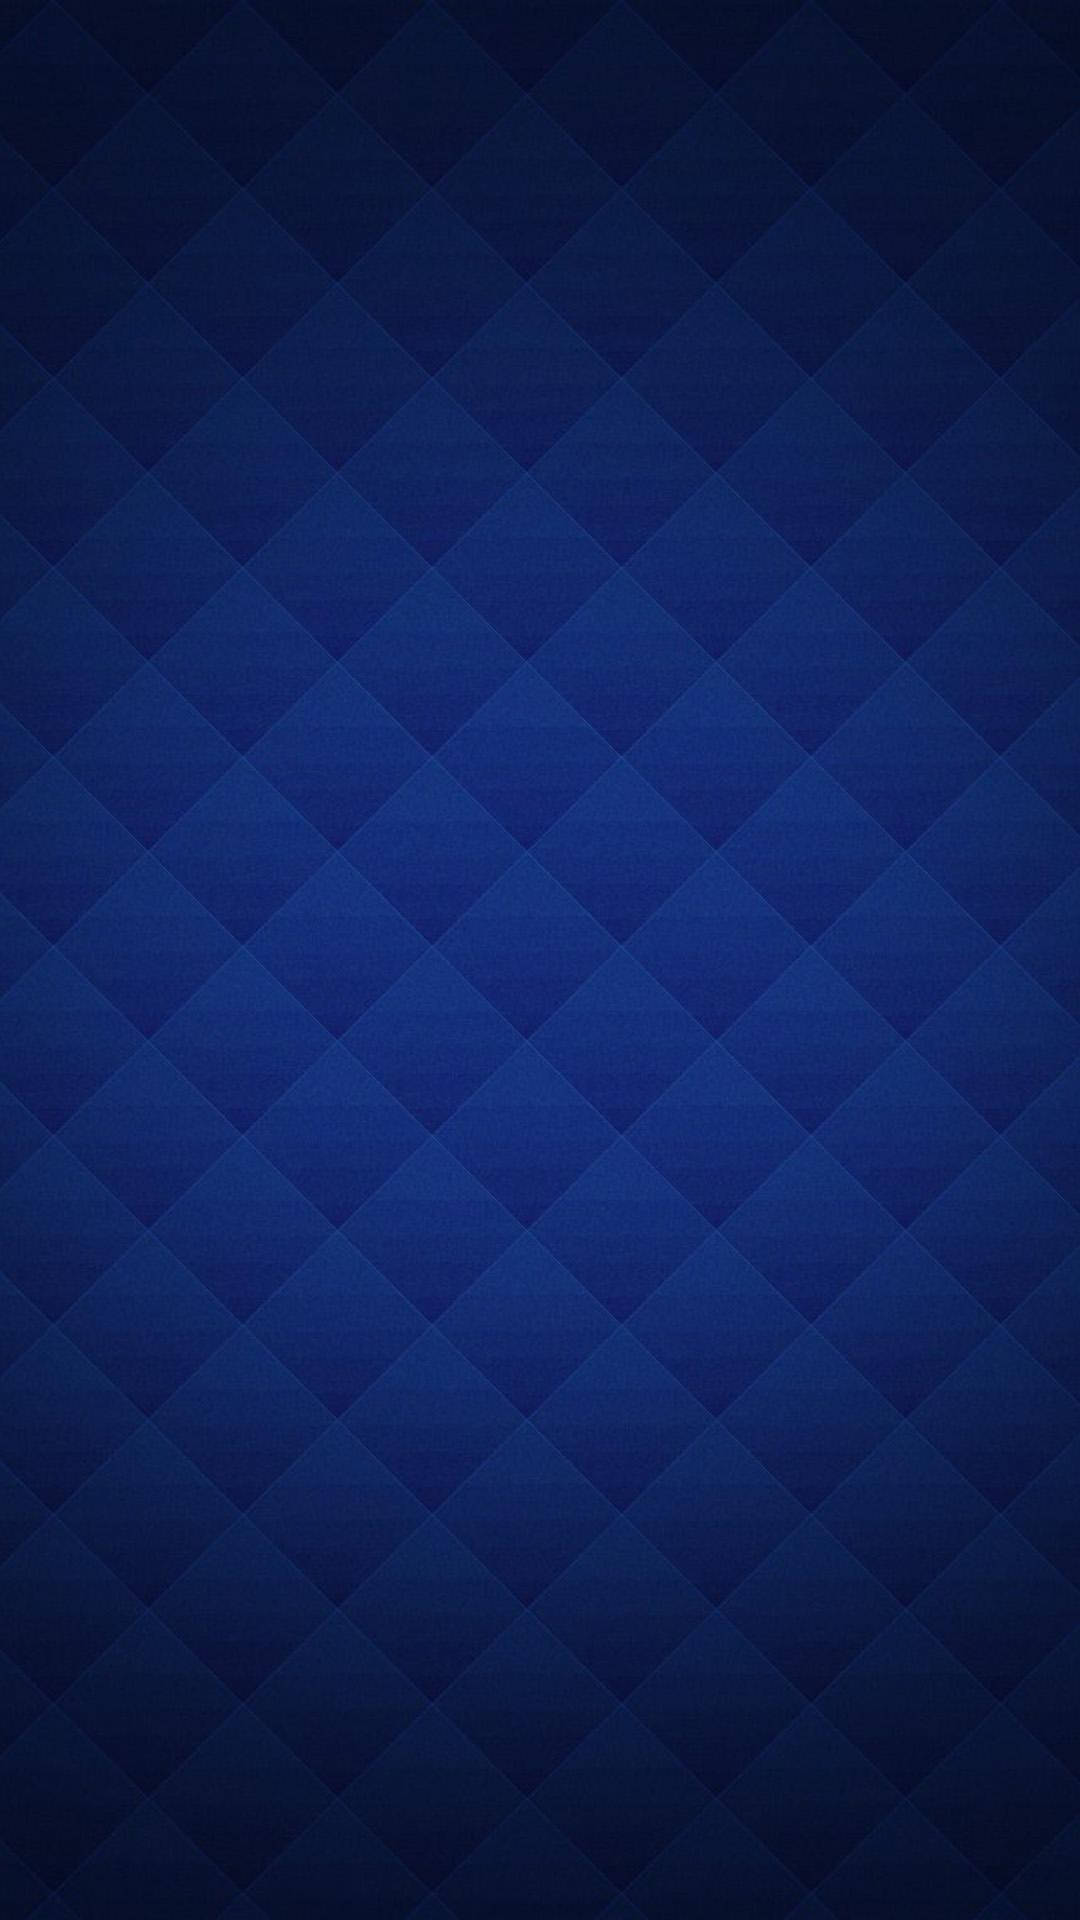 Blue Diamond Shapes Ios 7 Wallpaper